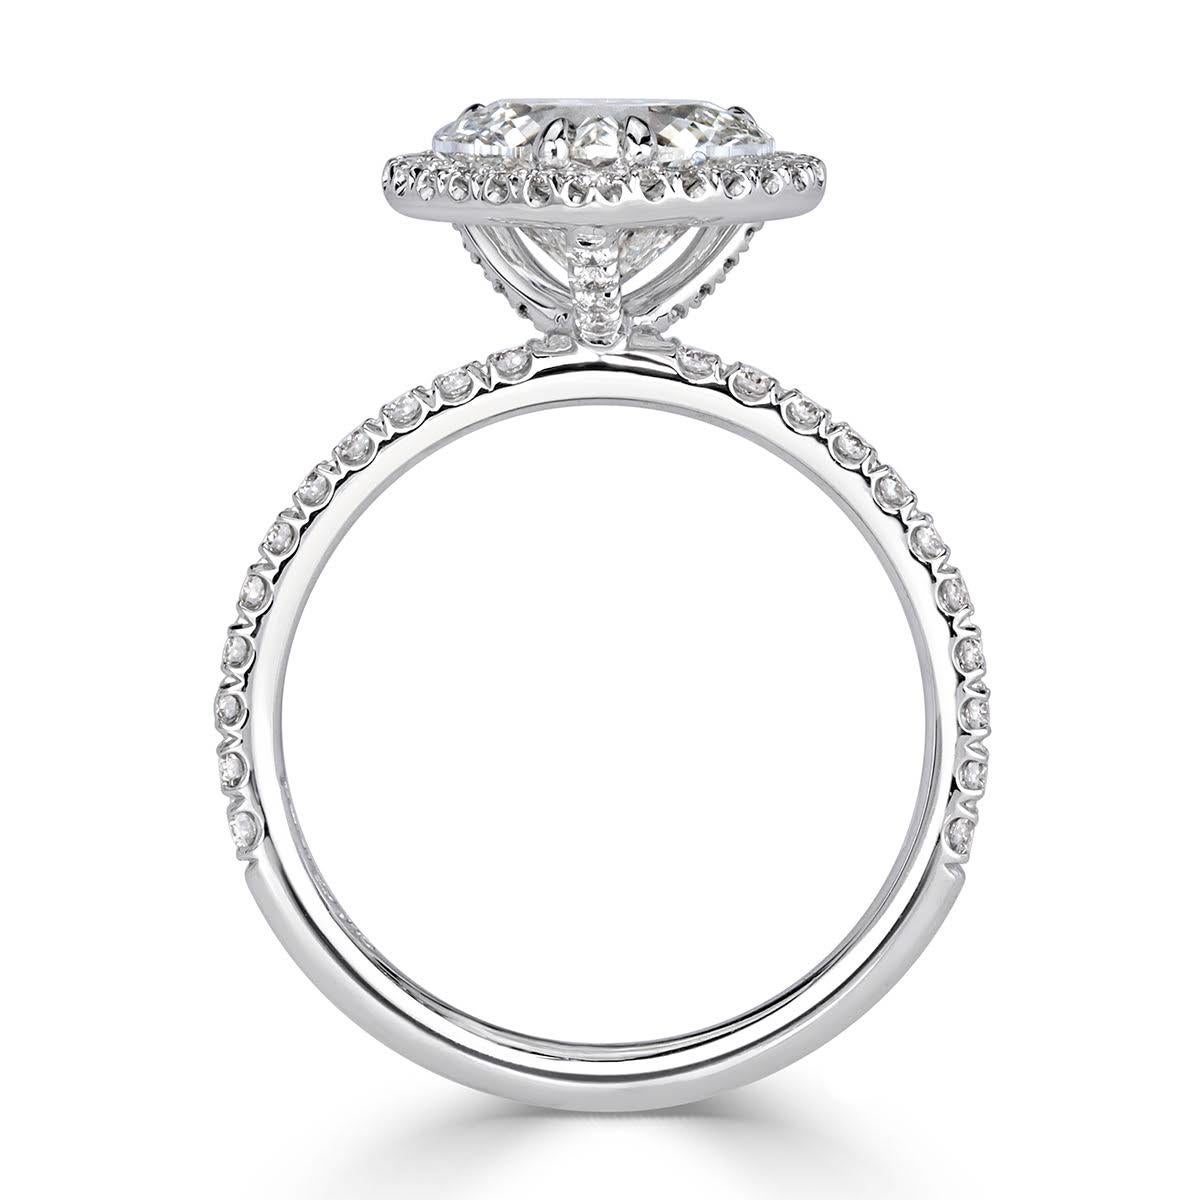 4 carat heart shaped diamond ring